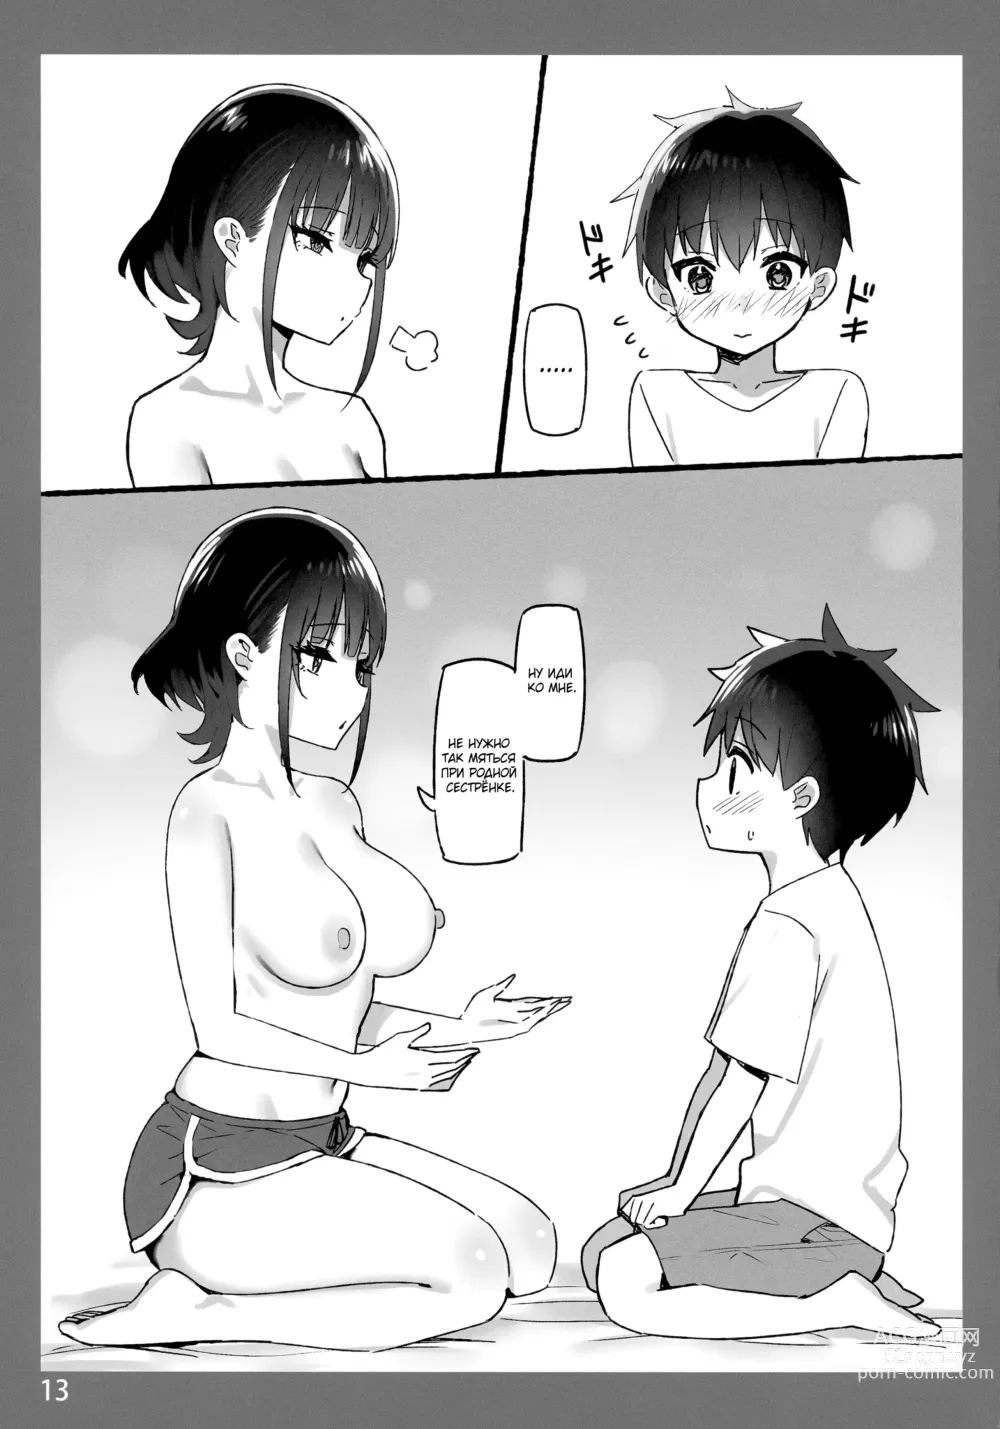 Page 13 of doujinshi Ощущение таяния с сестрой SP 2